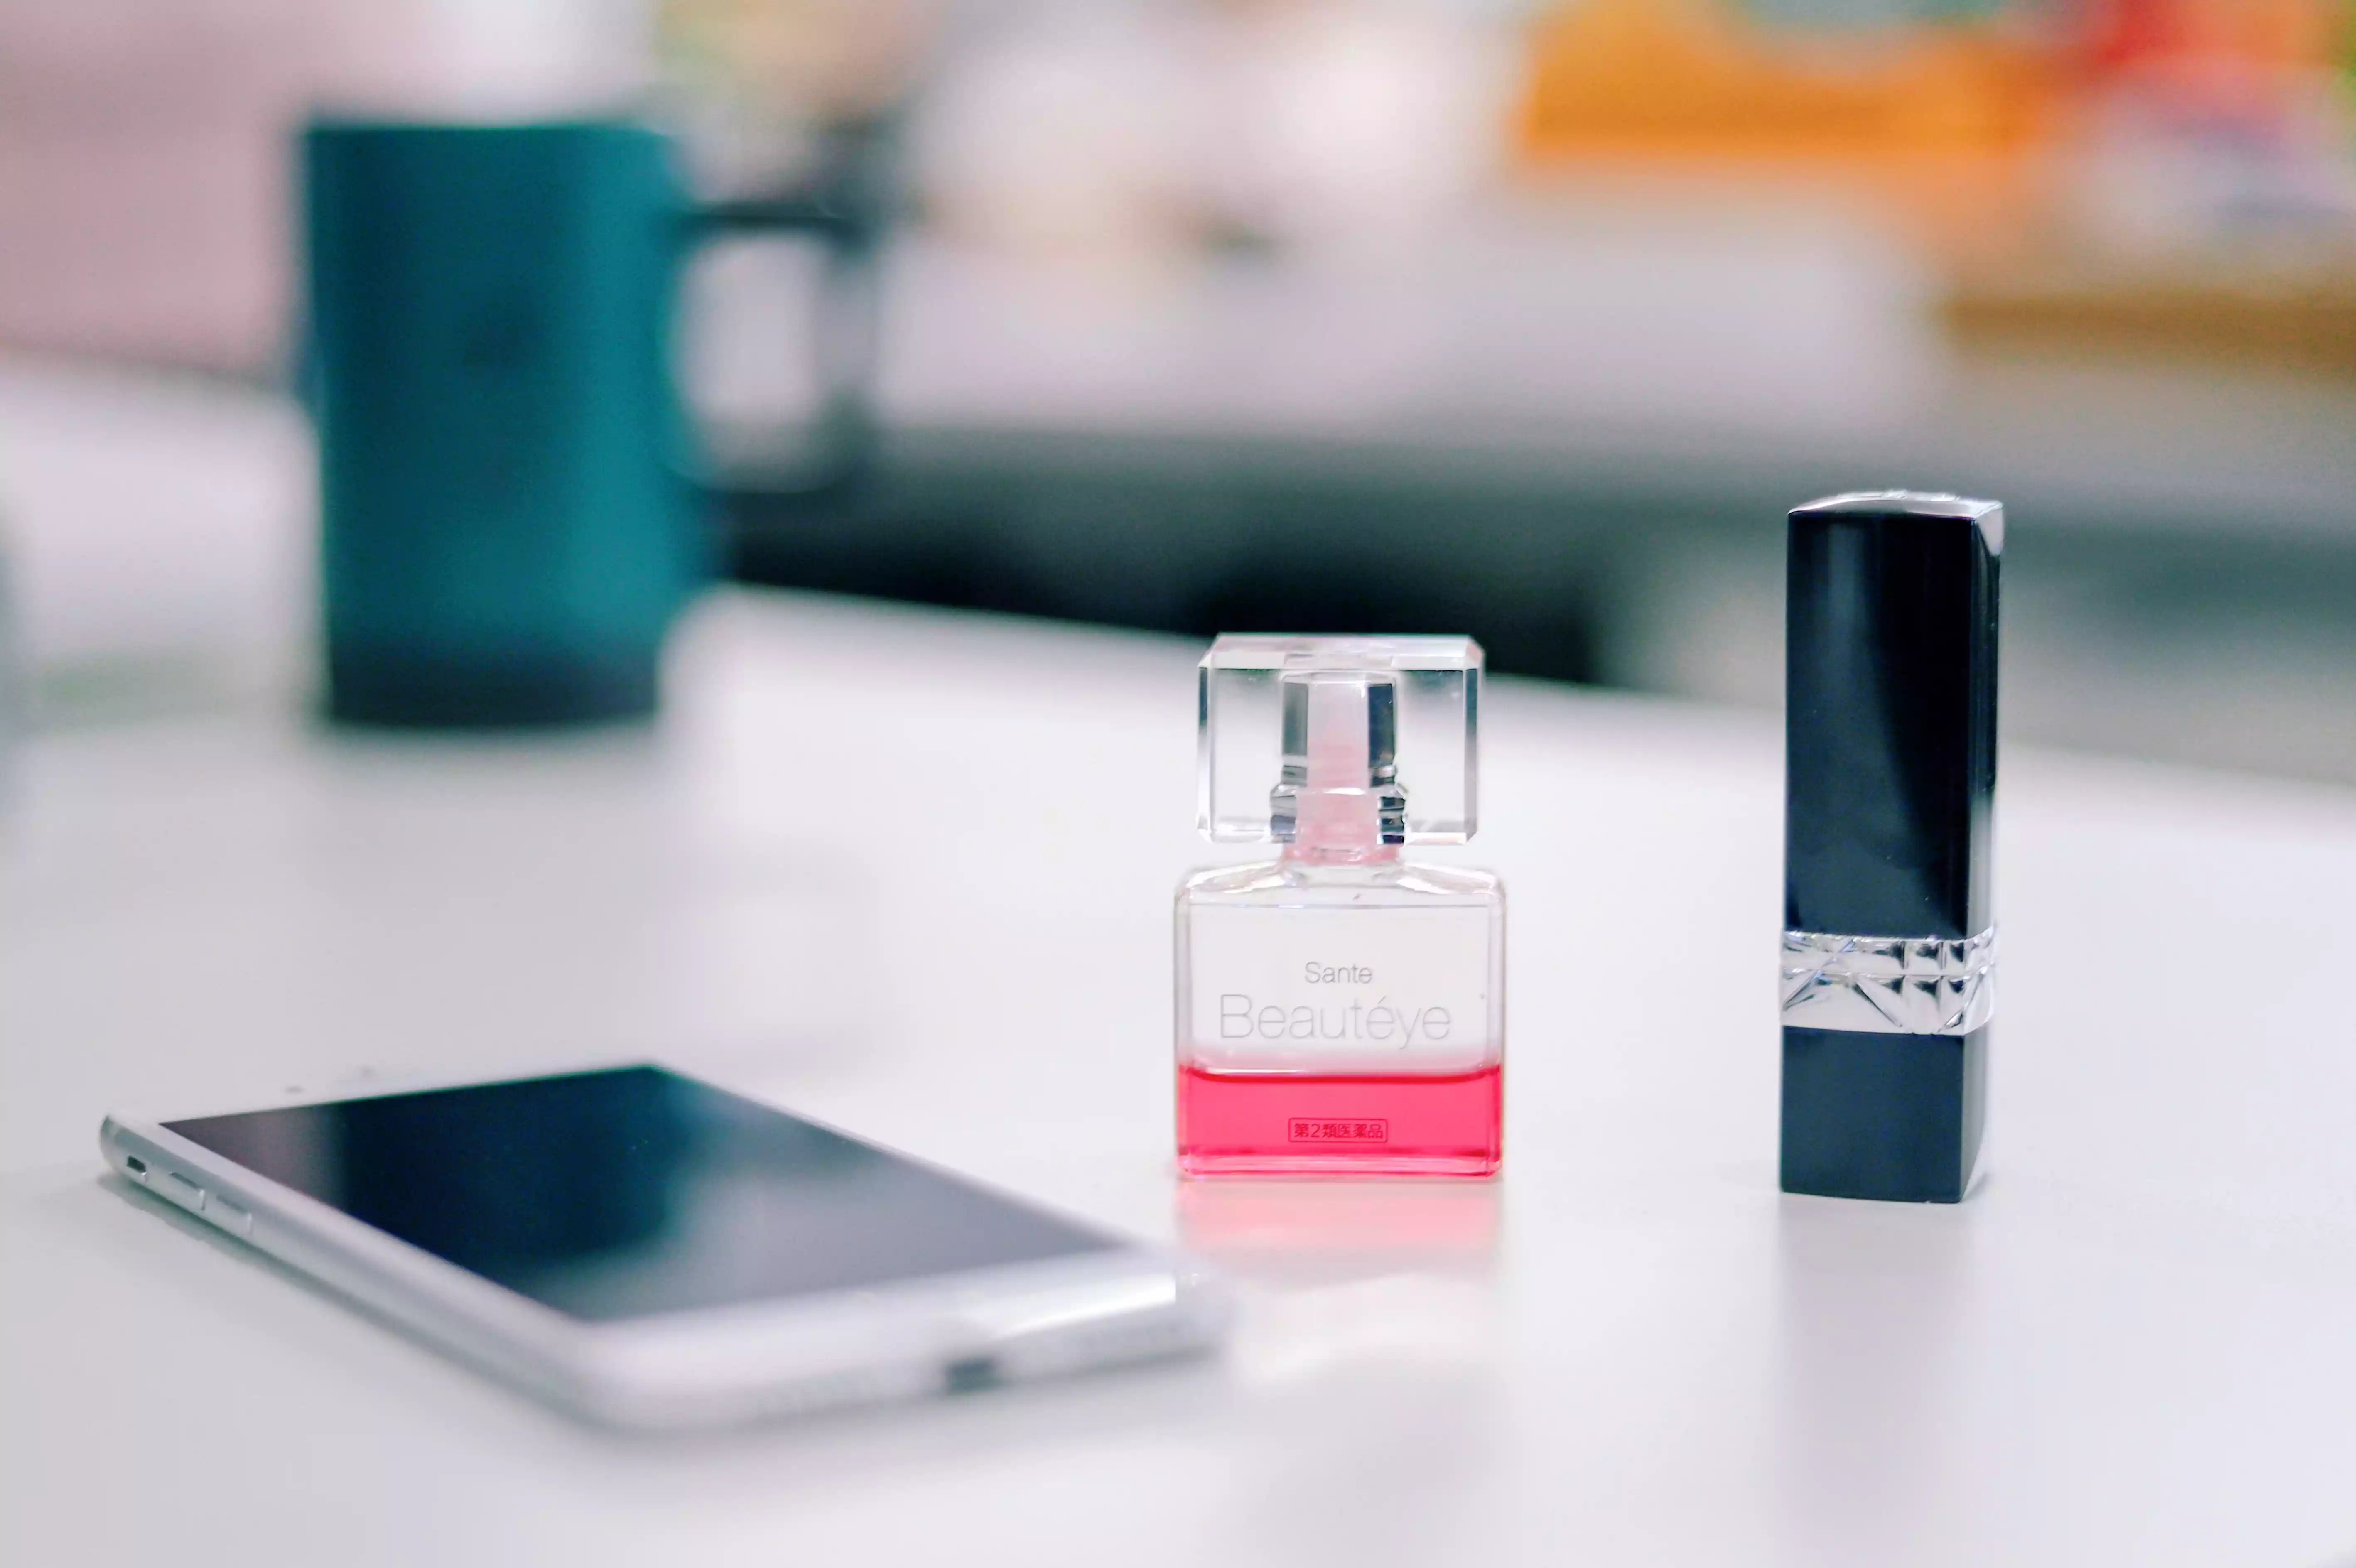 Smartphone and perfume bottle